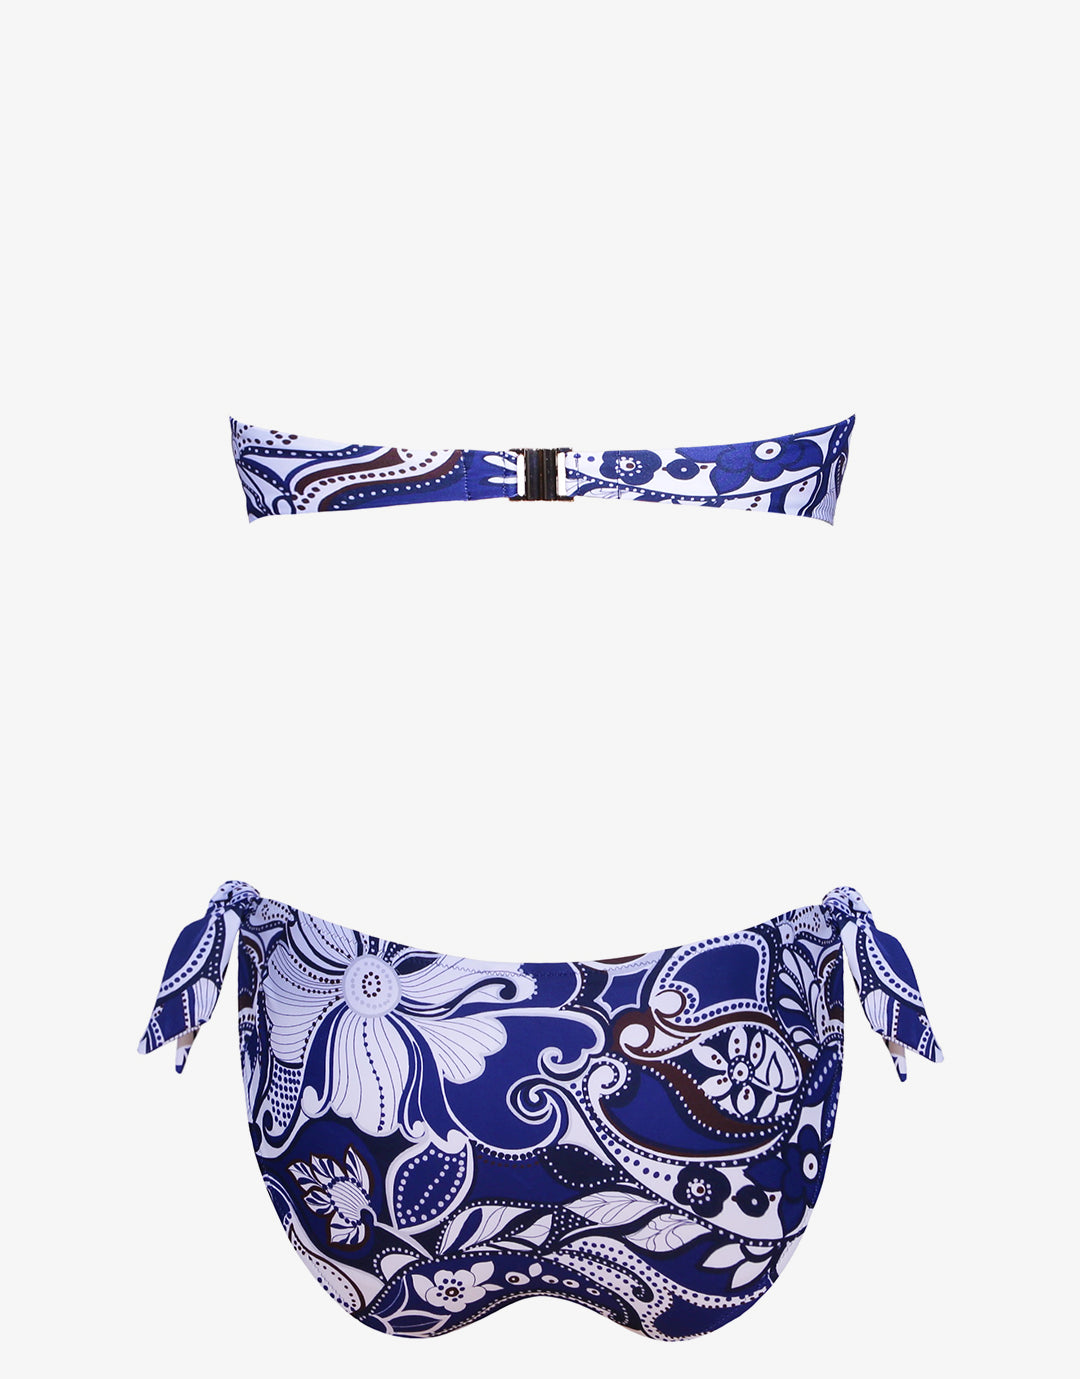 Cachemire Moulded Bandeau Bikini Set - Blue and White - Simply Beach UK